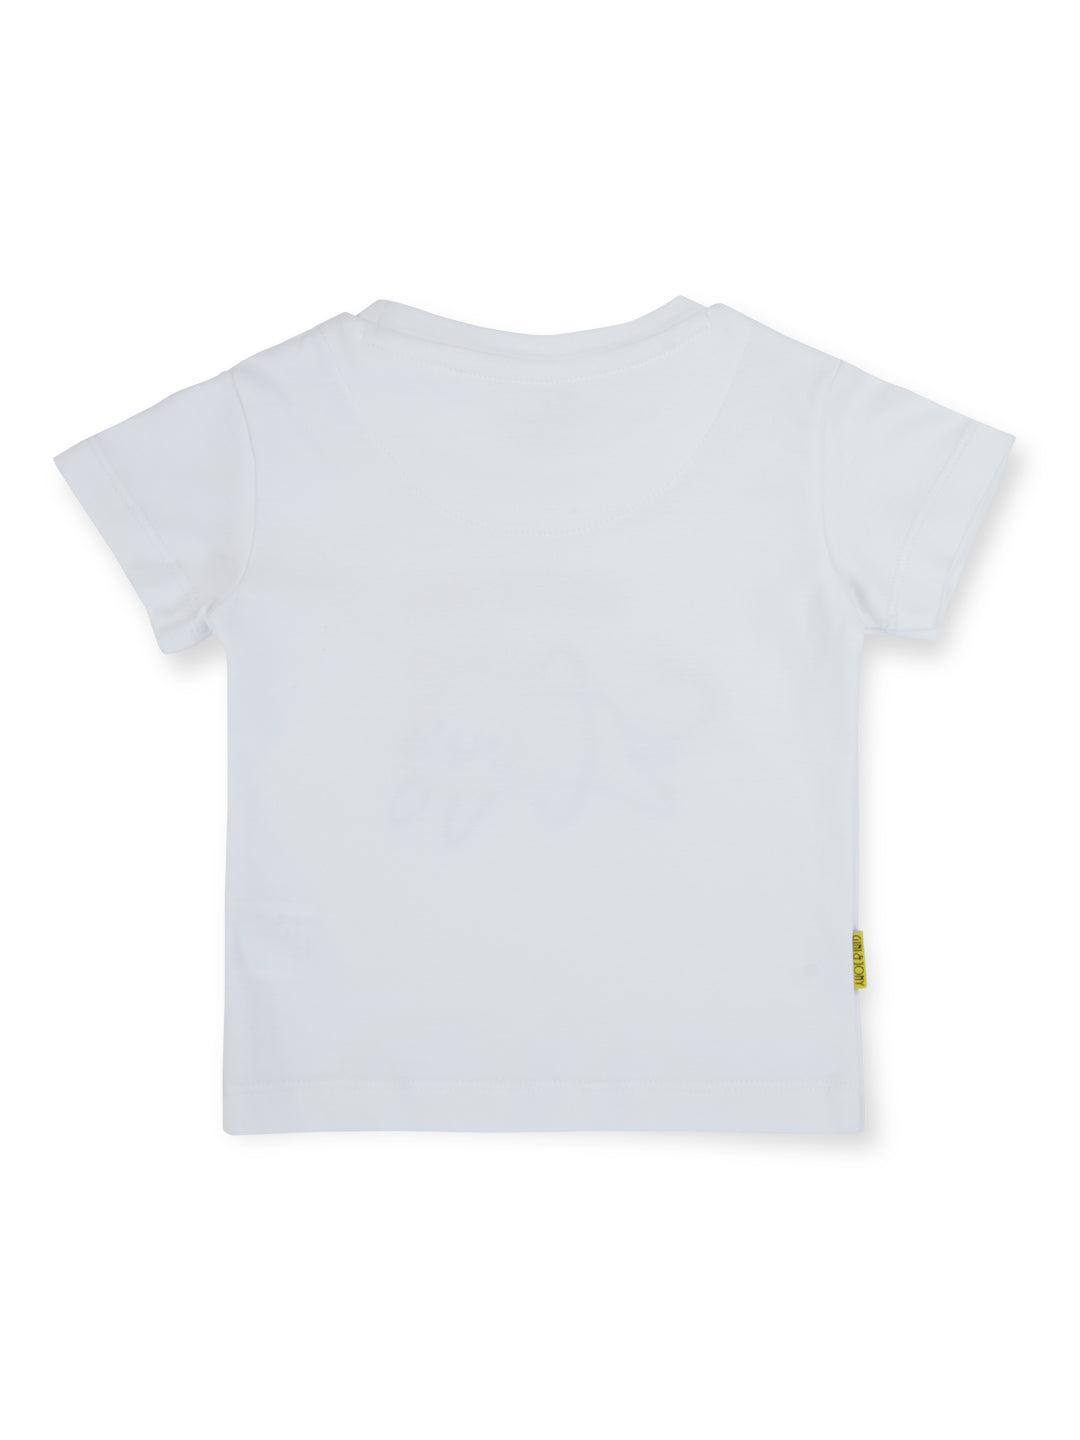 Unisex White Whitty Wiskers Cotton Round Neck Half Sleeve T-Shirt